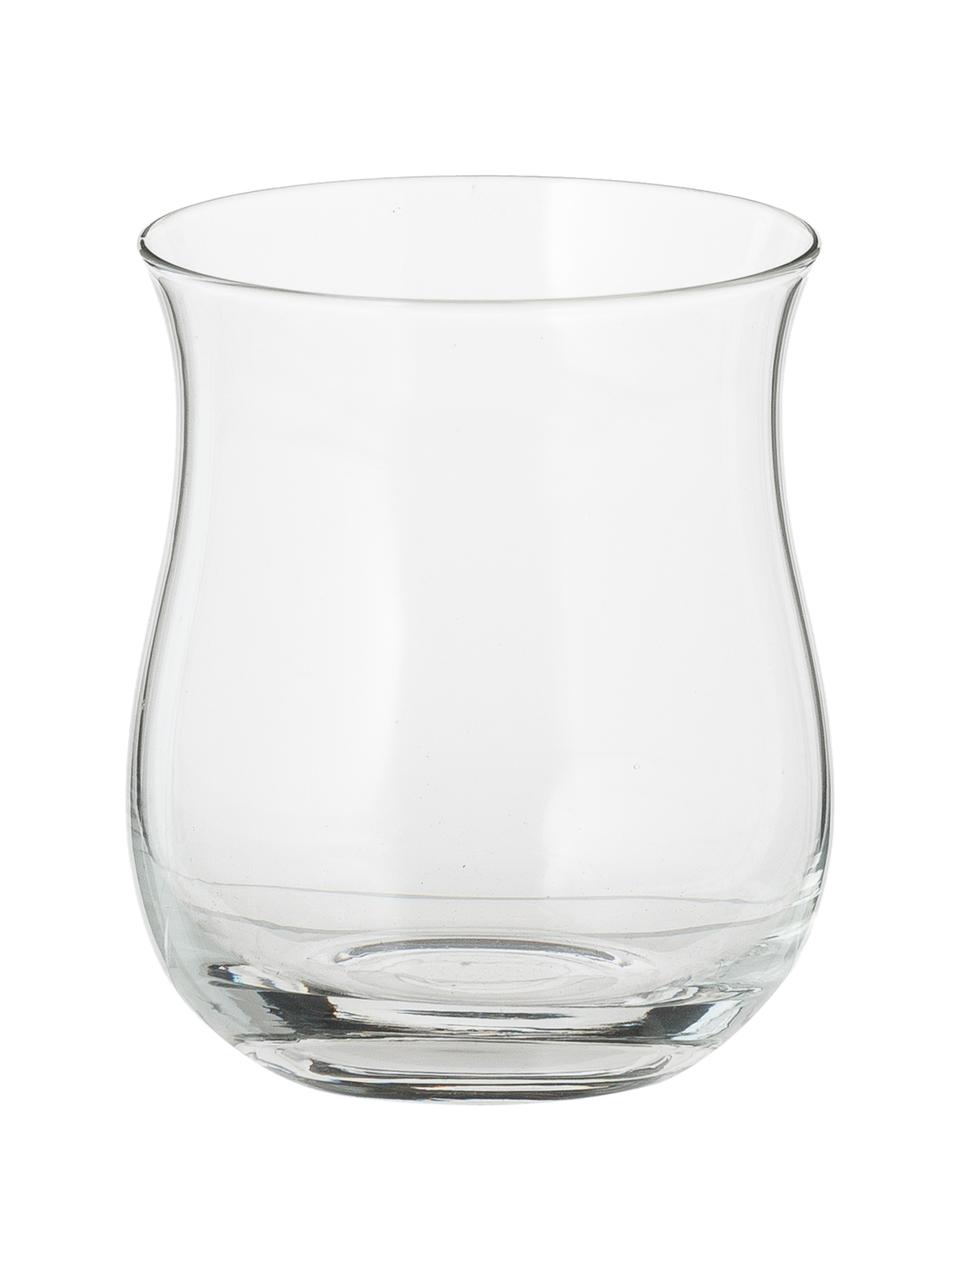 Komplet szklanek ze szkła dmuchanego Desigual, 6 elem., Szkło dmuchane, Transparentny, Ø 8 x W 10 cm, 200 ml